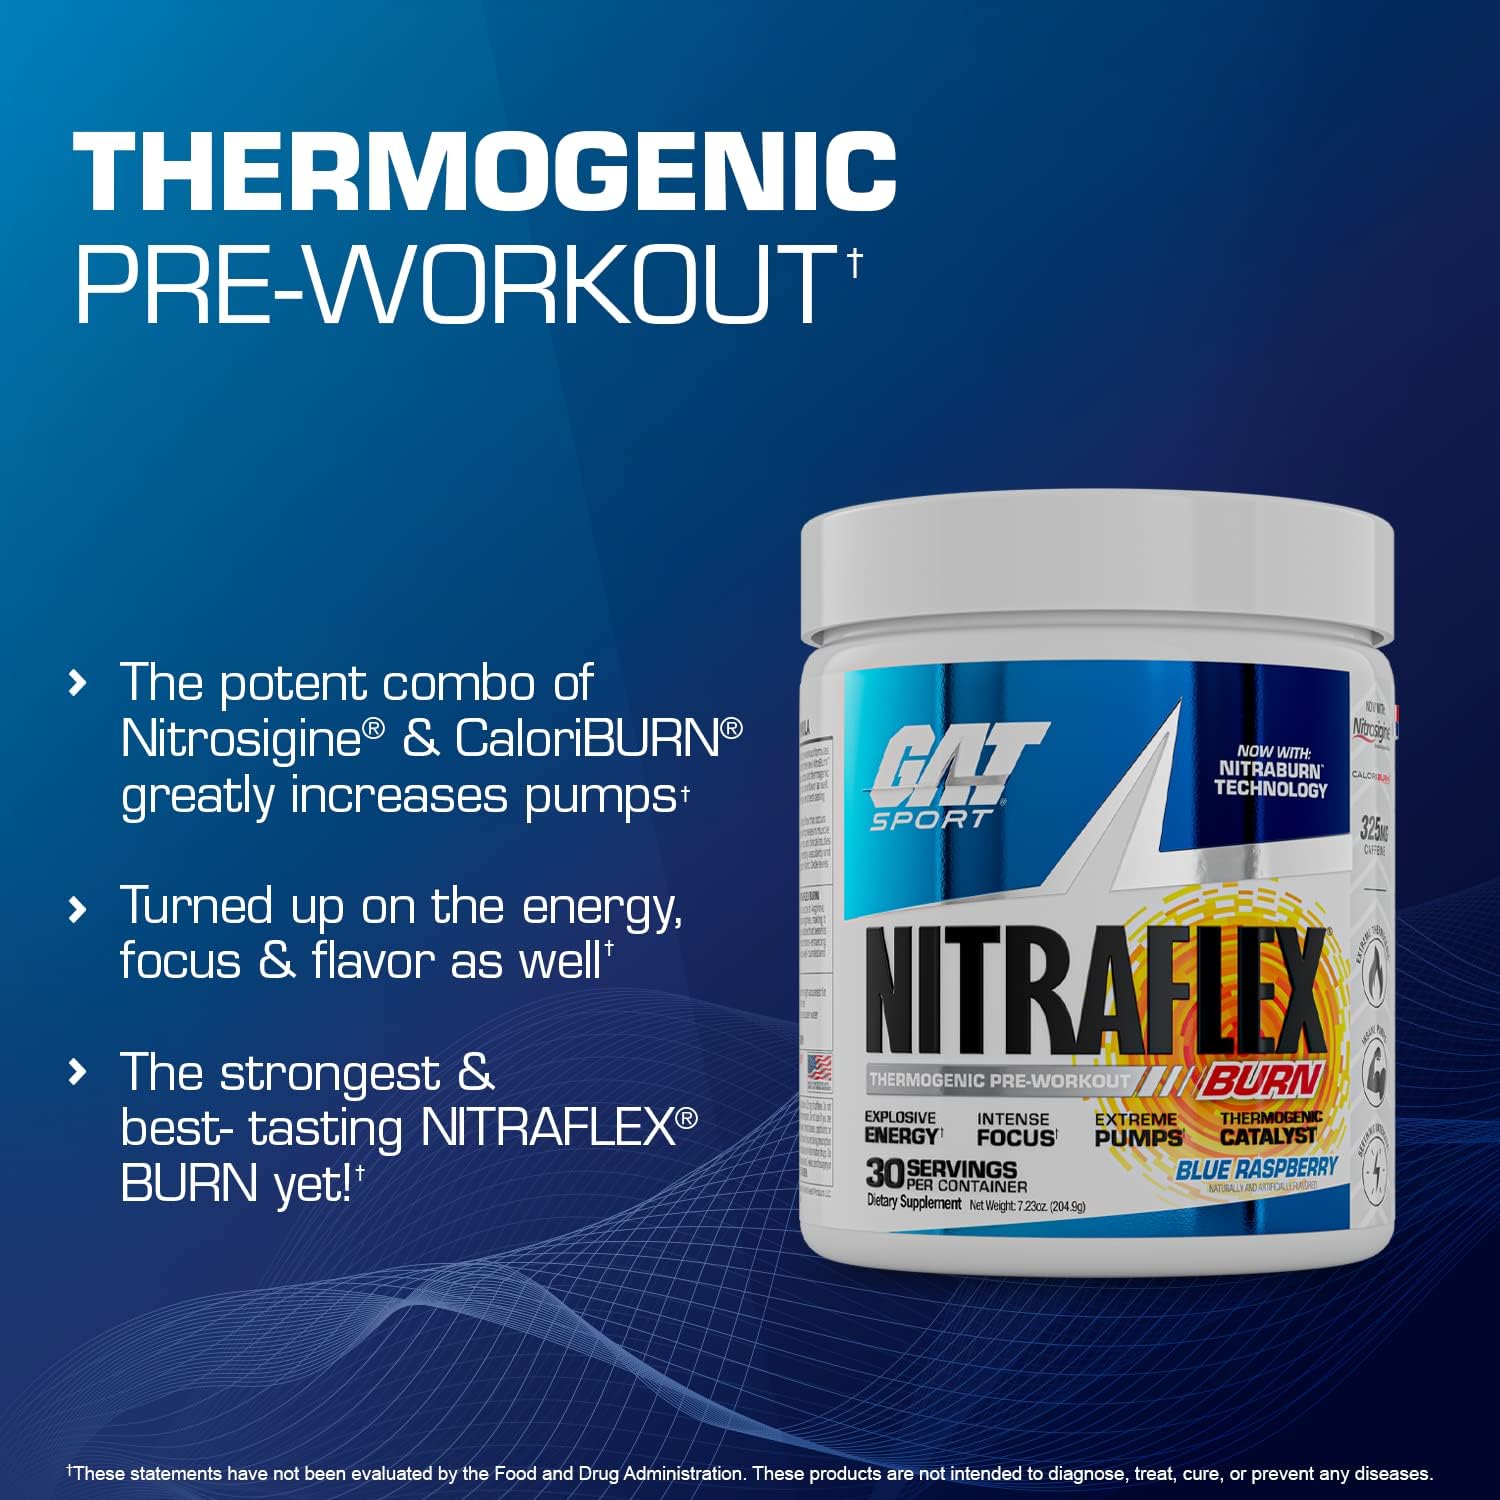 GAT SPORT NITRAFLEX Burn, Pre Workout Thermogenic Powder, Tropic Thund